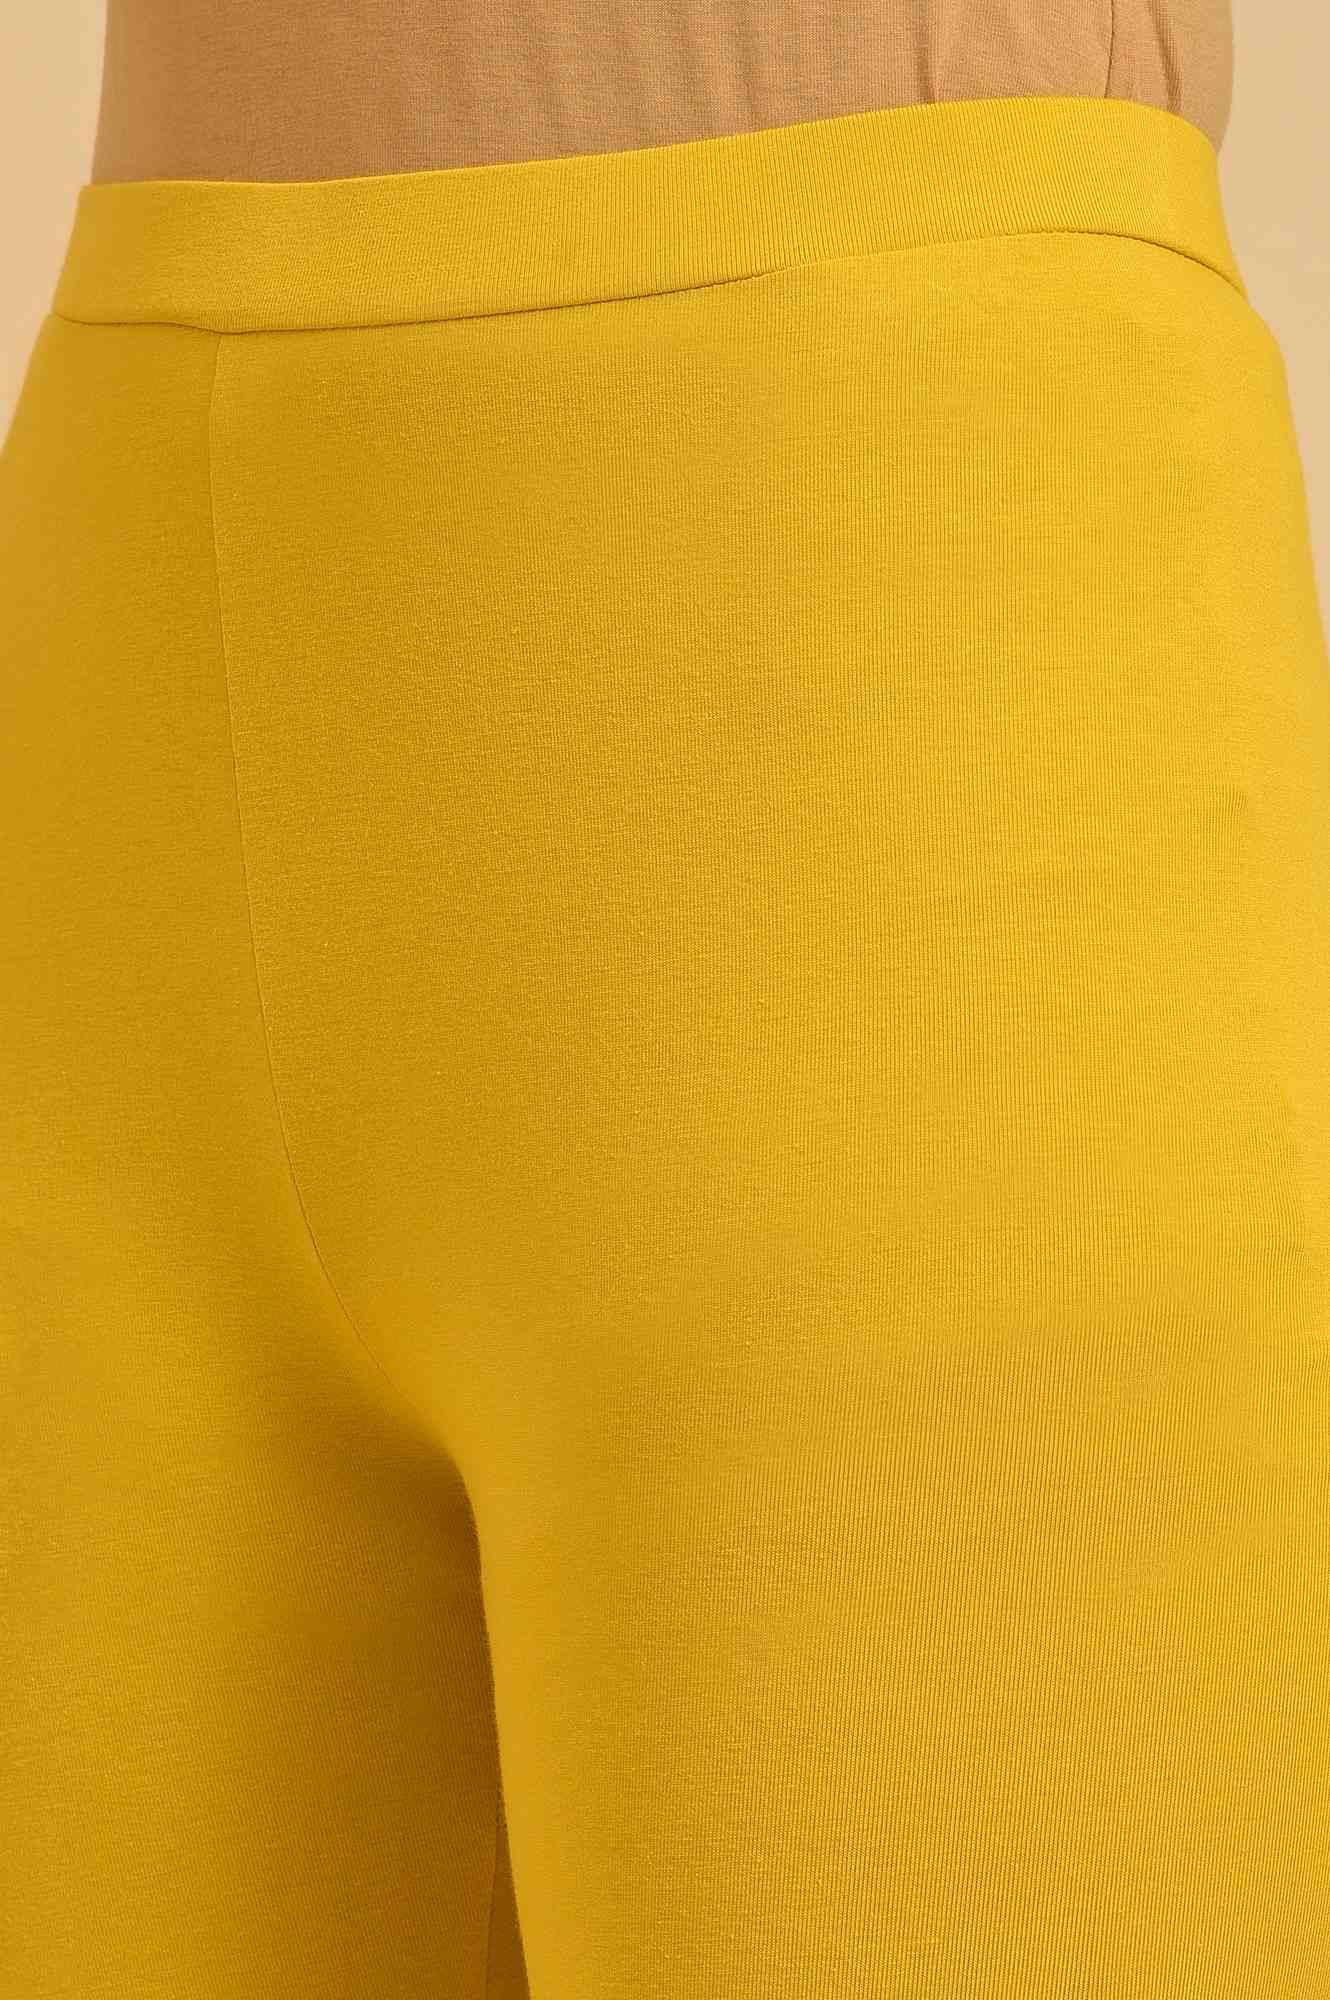 Yellow Printed kurta, Tights &amp; Dupatta Set - wforwoman